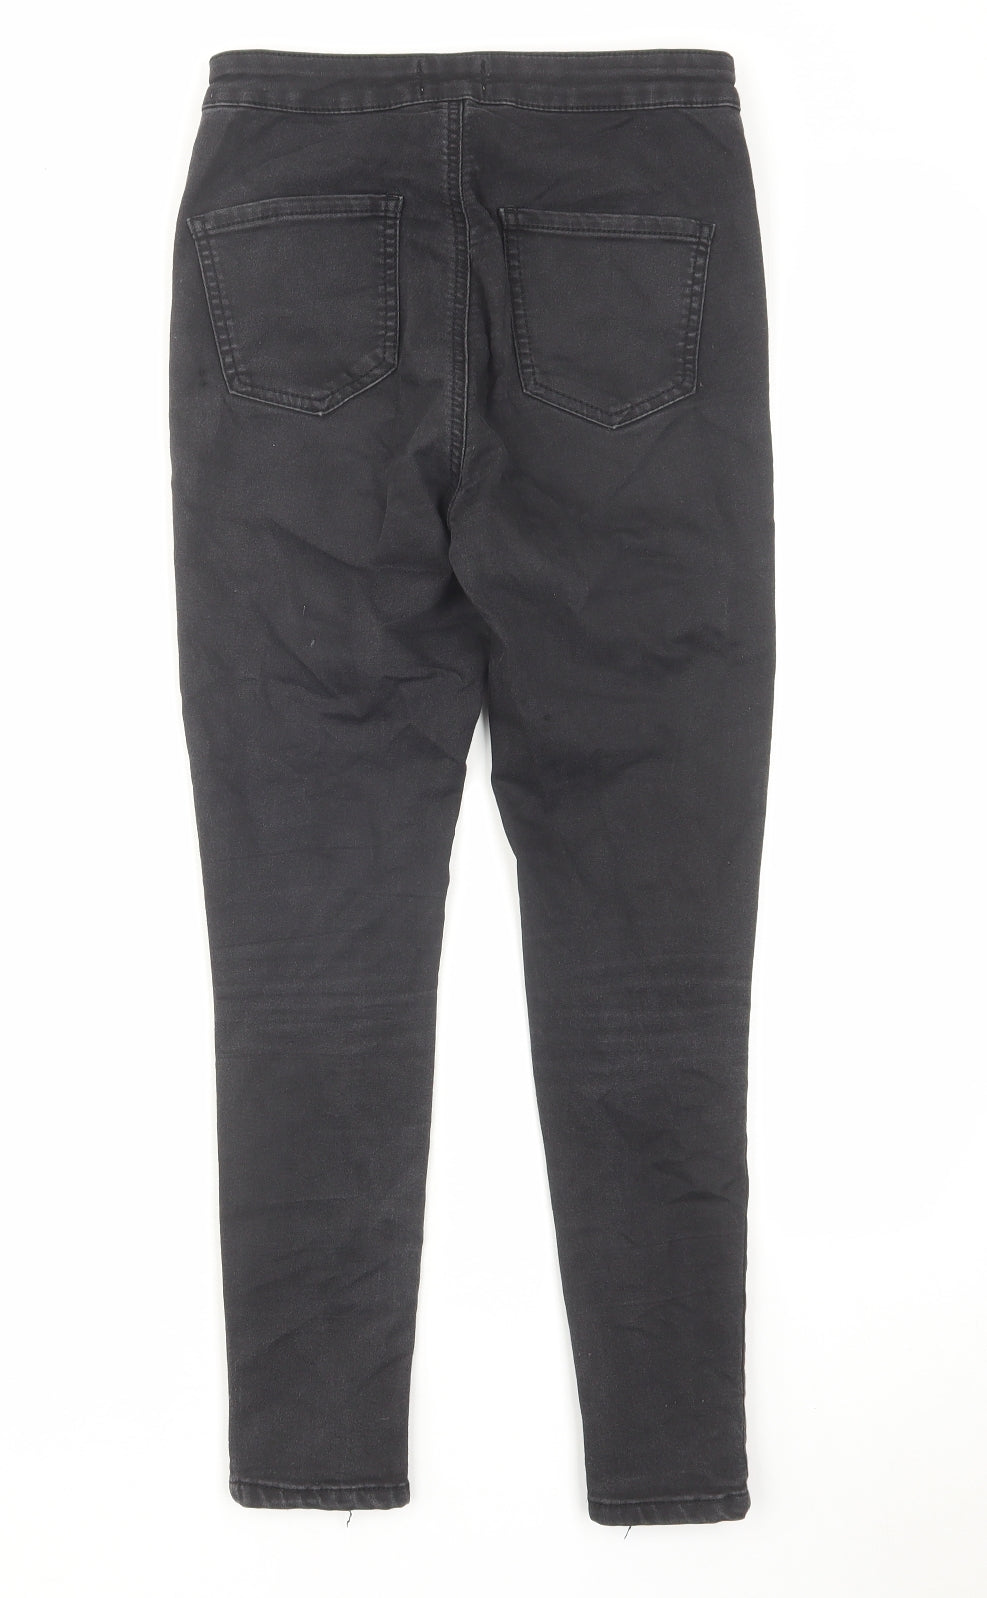 Miss Selfridge Womens Black Cotton Skinny Jeans Size 10 L25 in Regular Zip